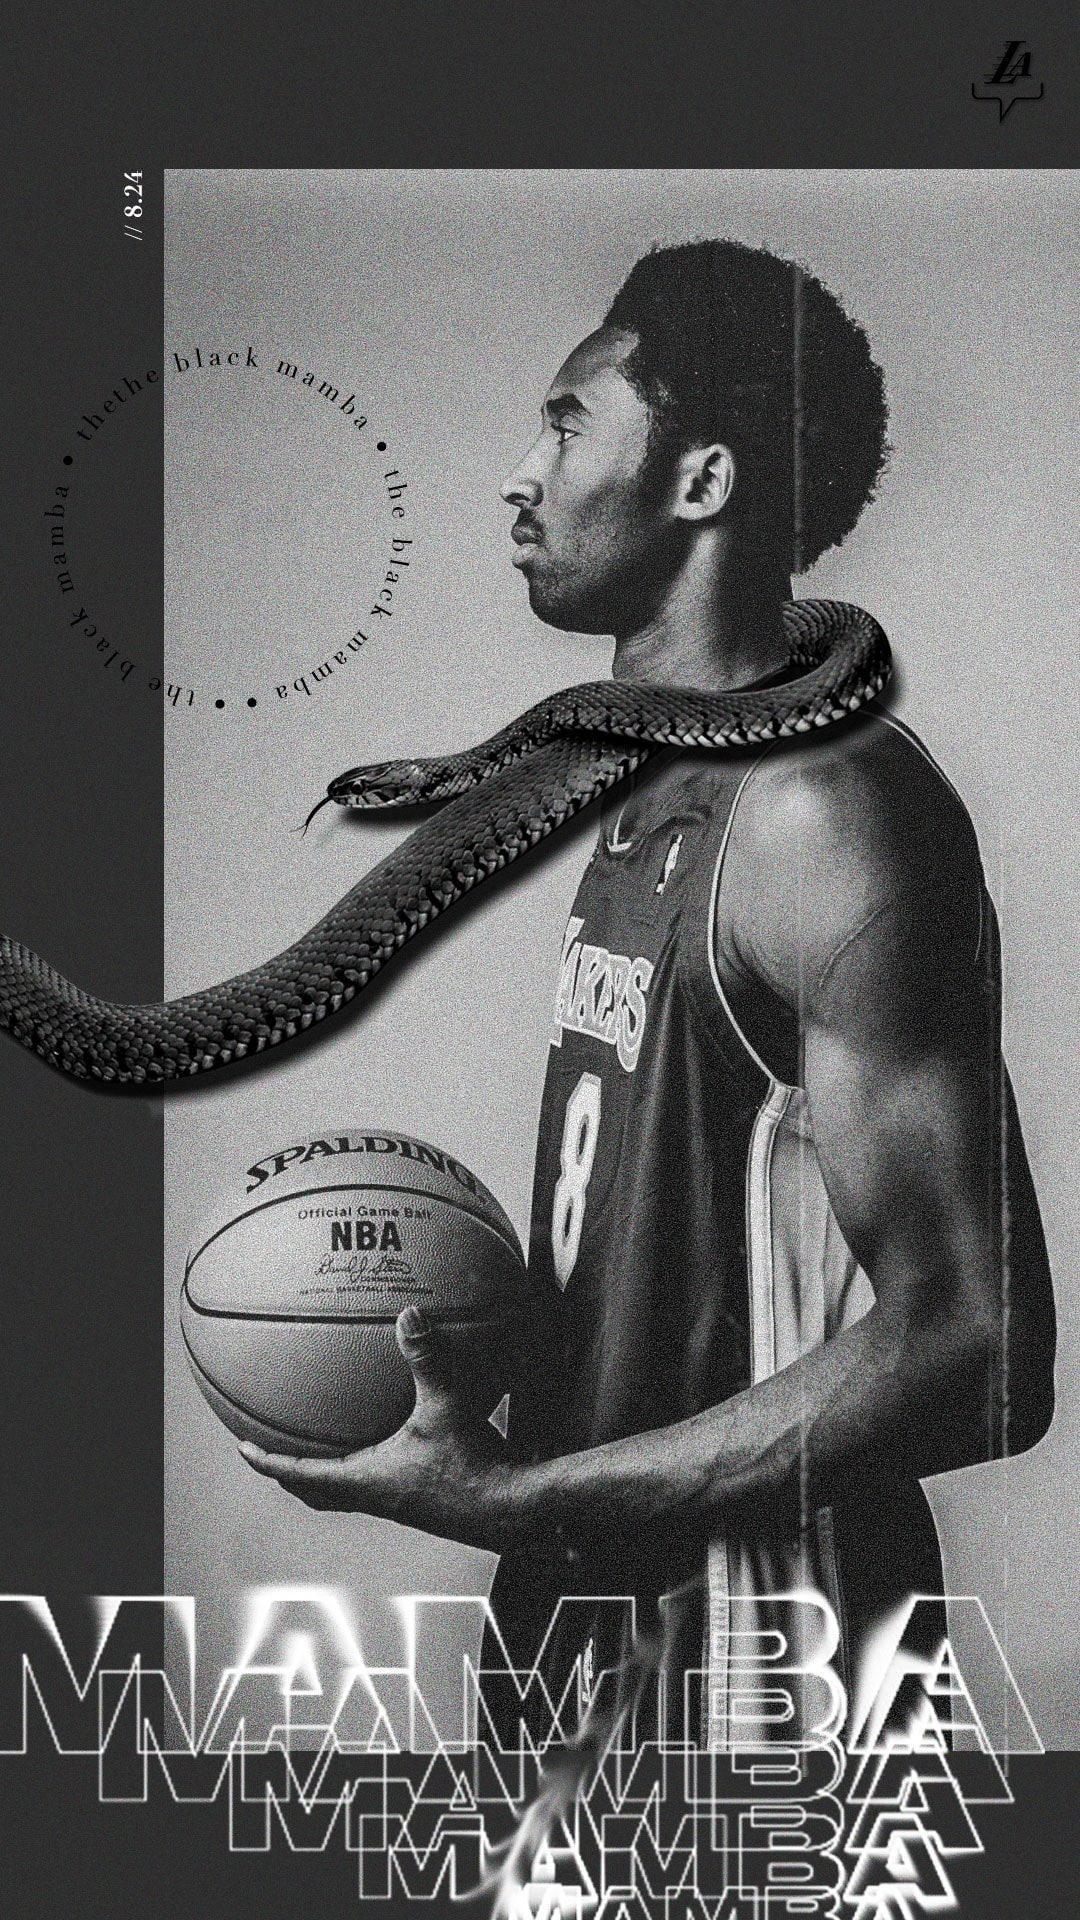 Lakers Wallpaper and Infographics. Kobe bryant wallpaper, Kobe bryant poster, Kobe bryant picture